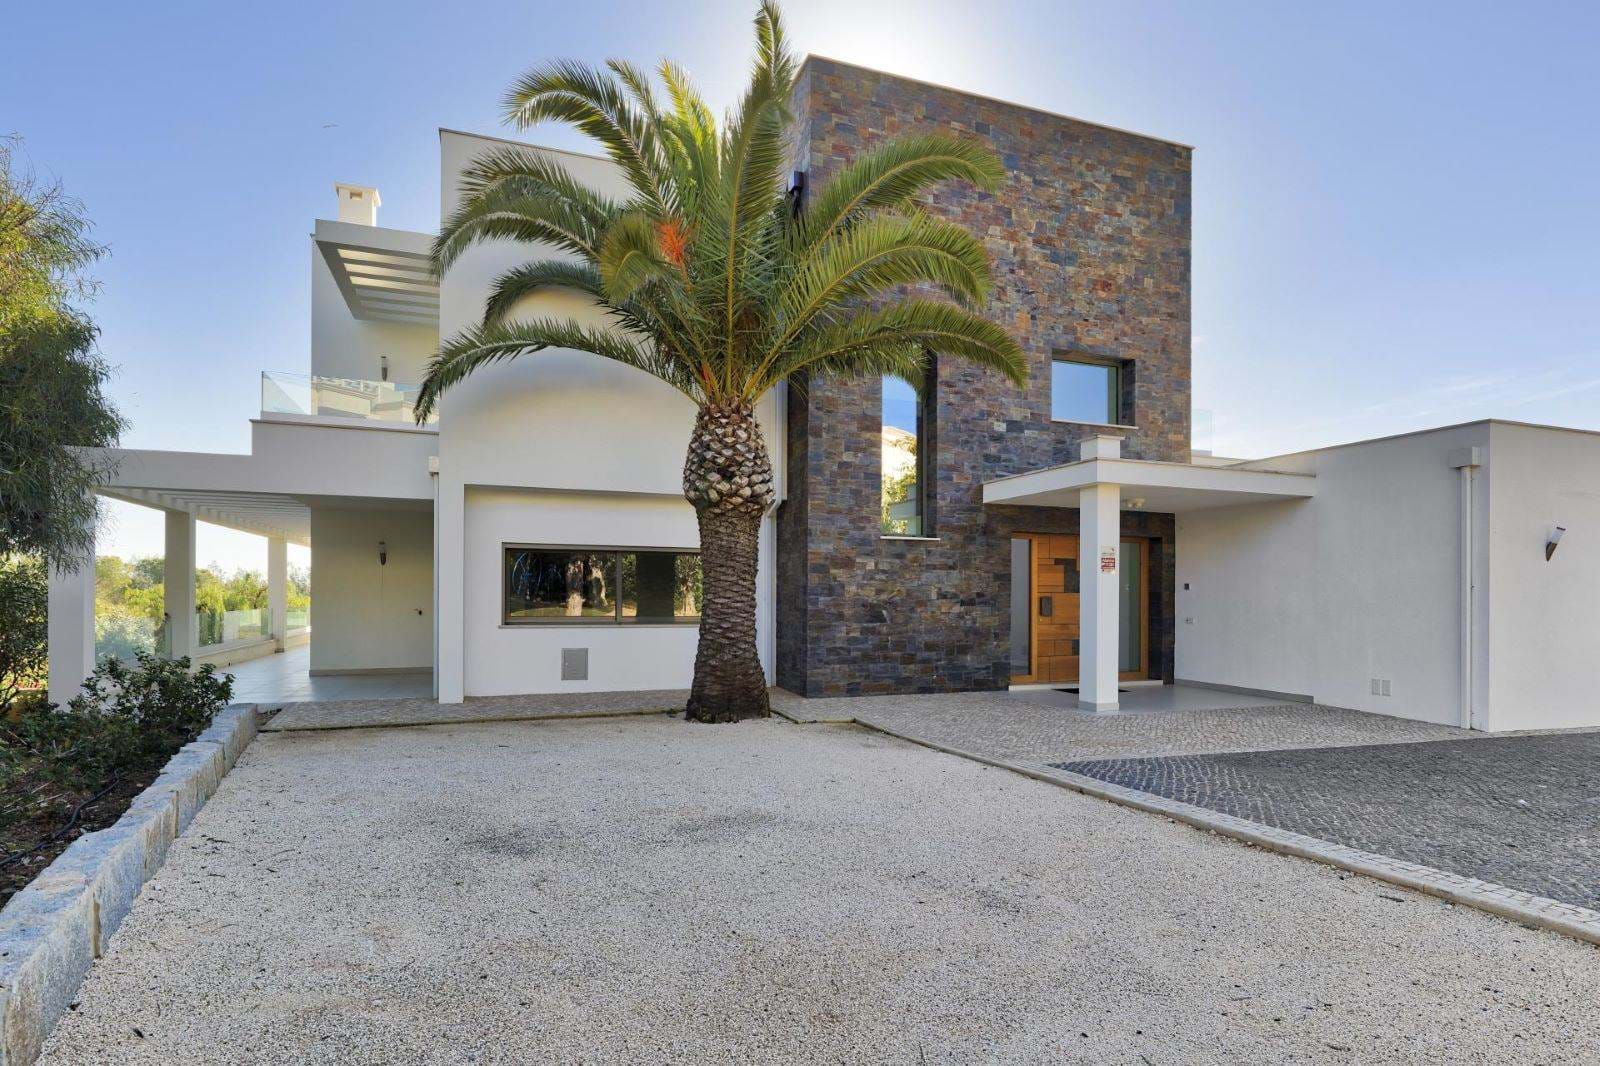 500m² villa with swimming pool, private path to the beach, sea view, VAU/Algarve.